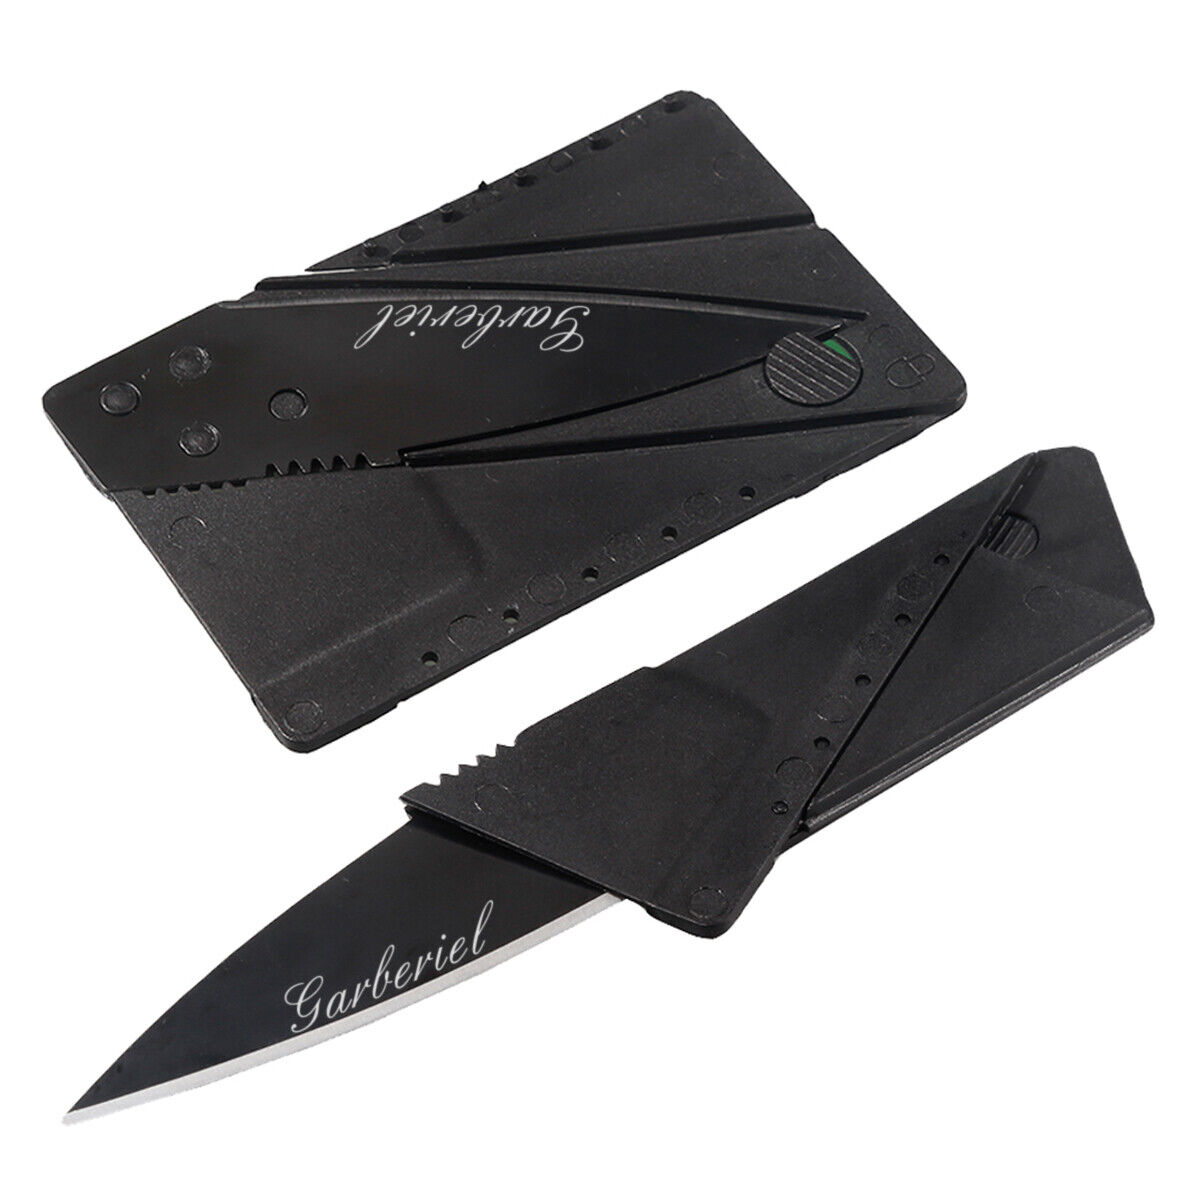 Lot 5-300Pack Credit Card Knives Folding Wallet Thin Pocket Survival Micro Knife